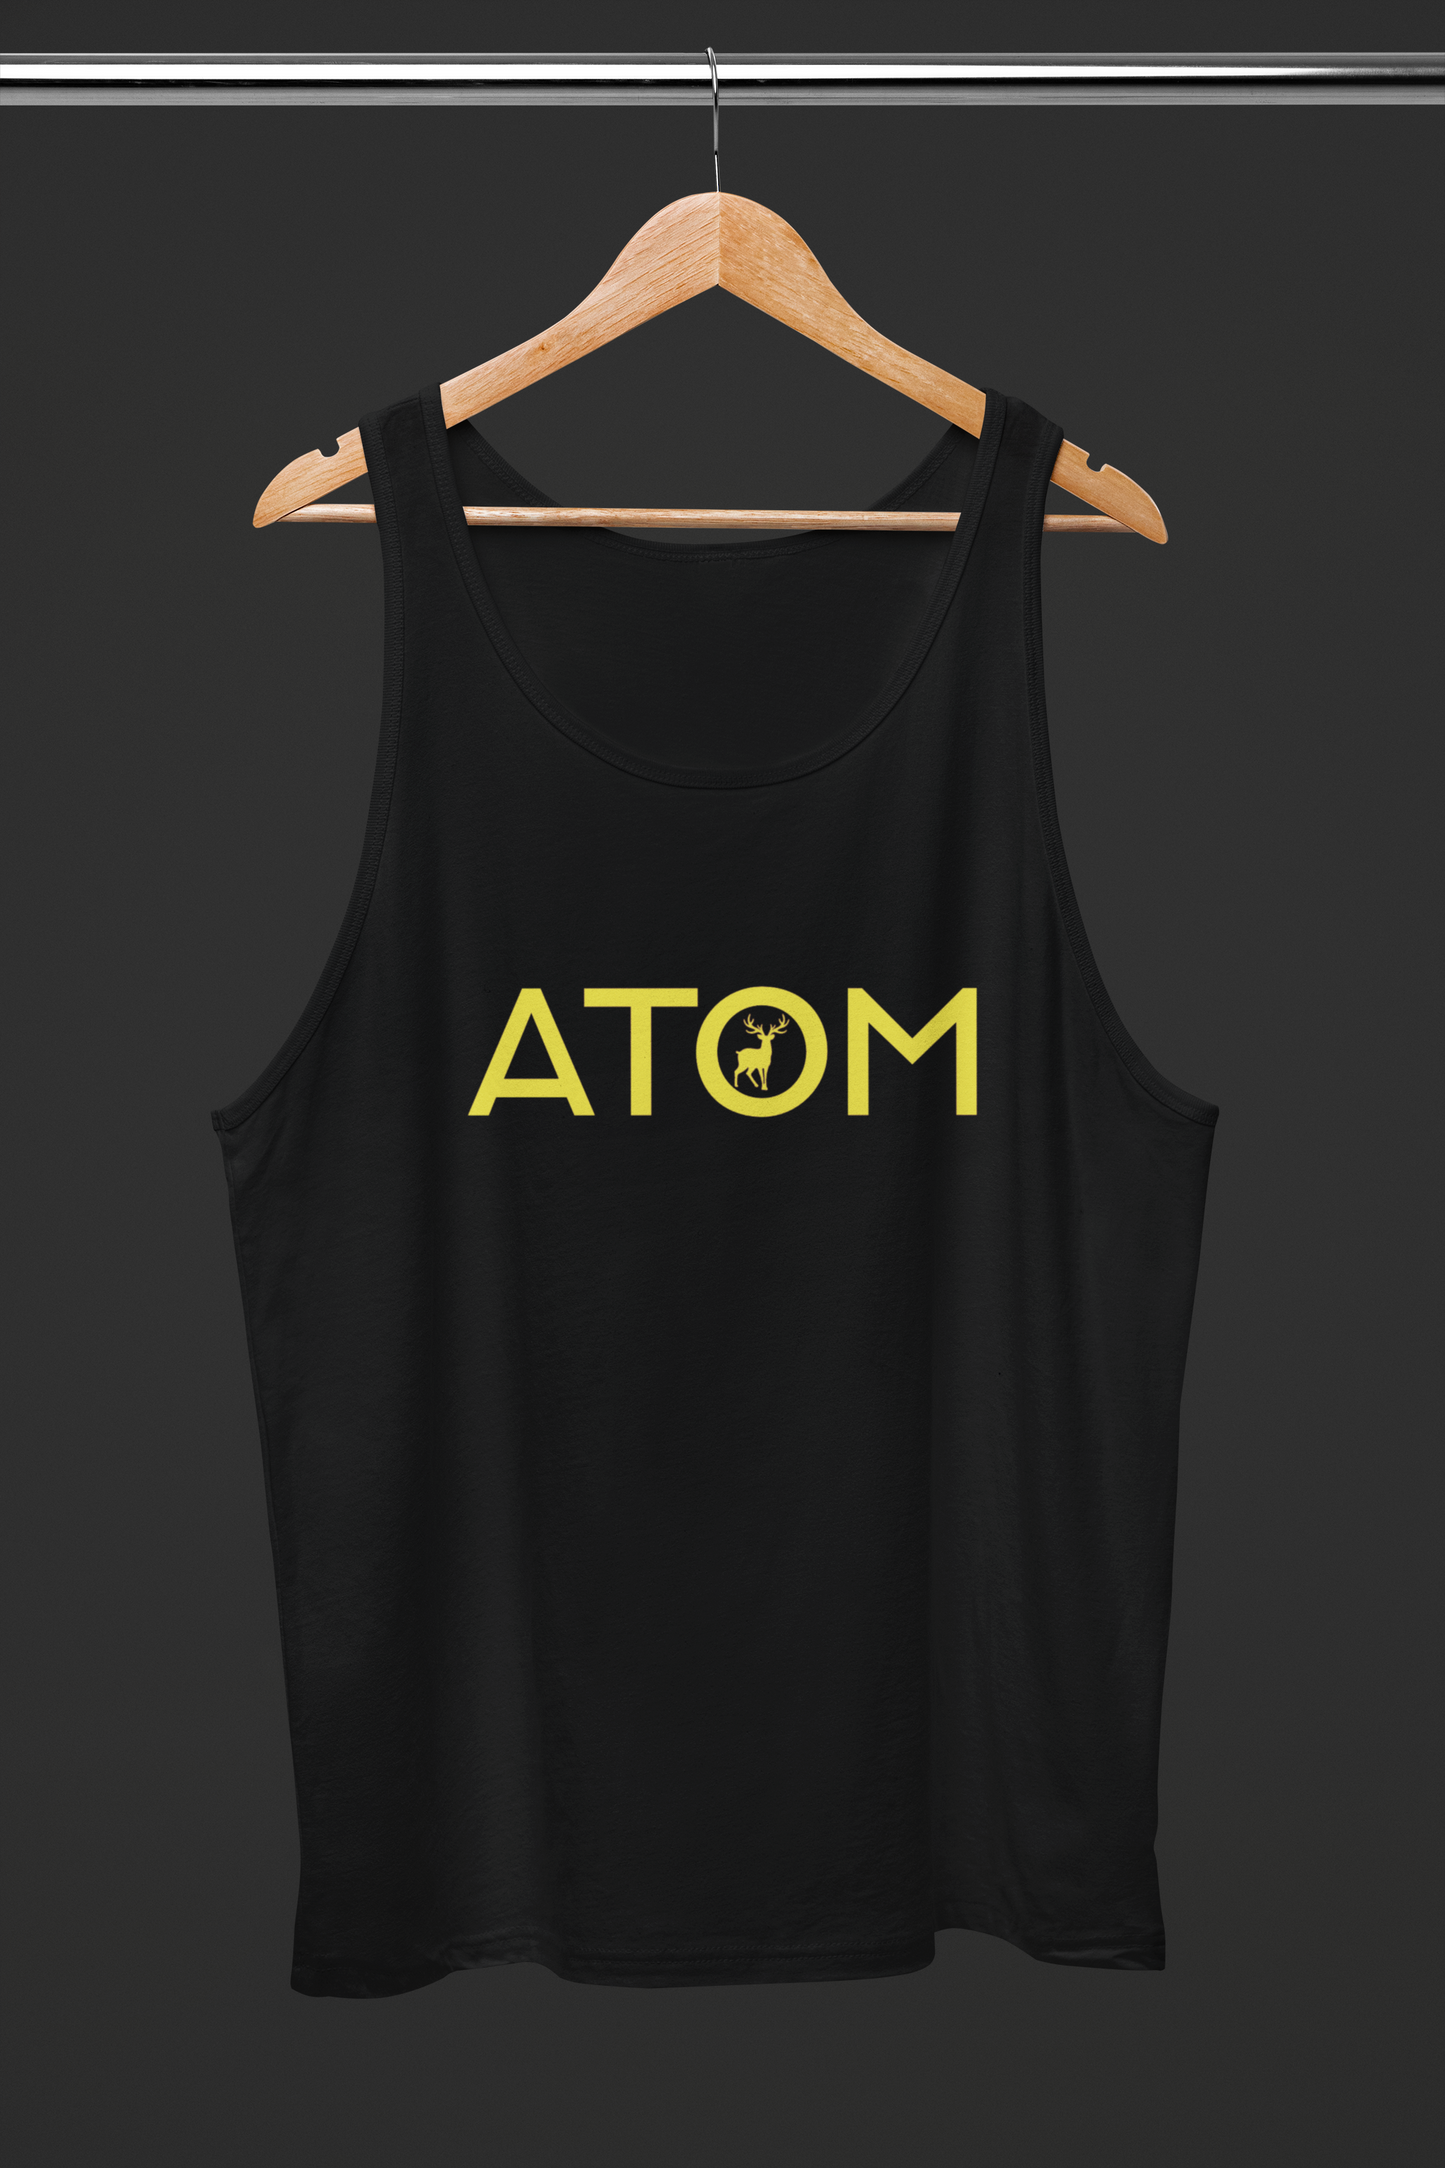 ATOM Yellow Signature Black Tank Top For Women